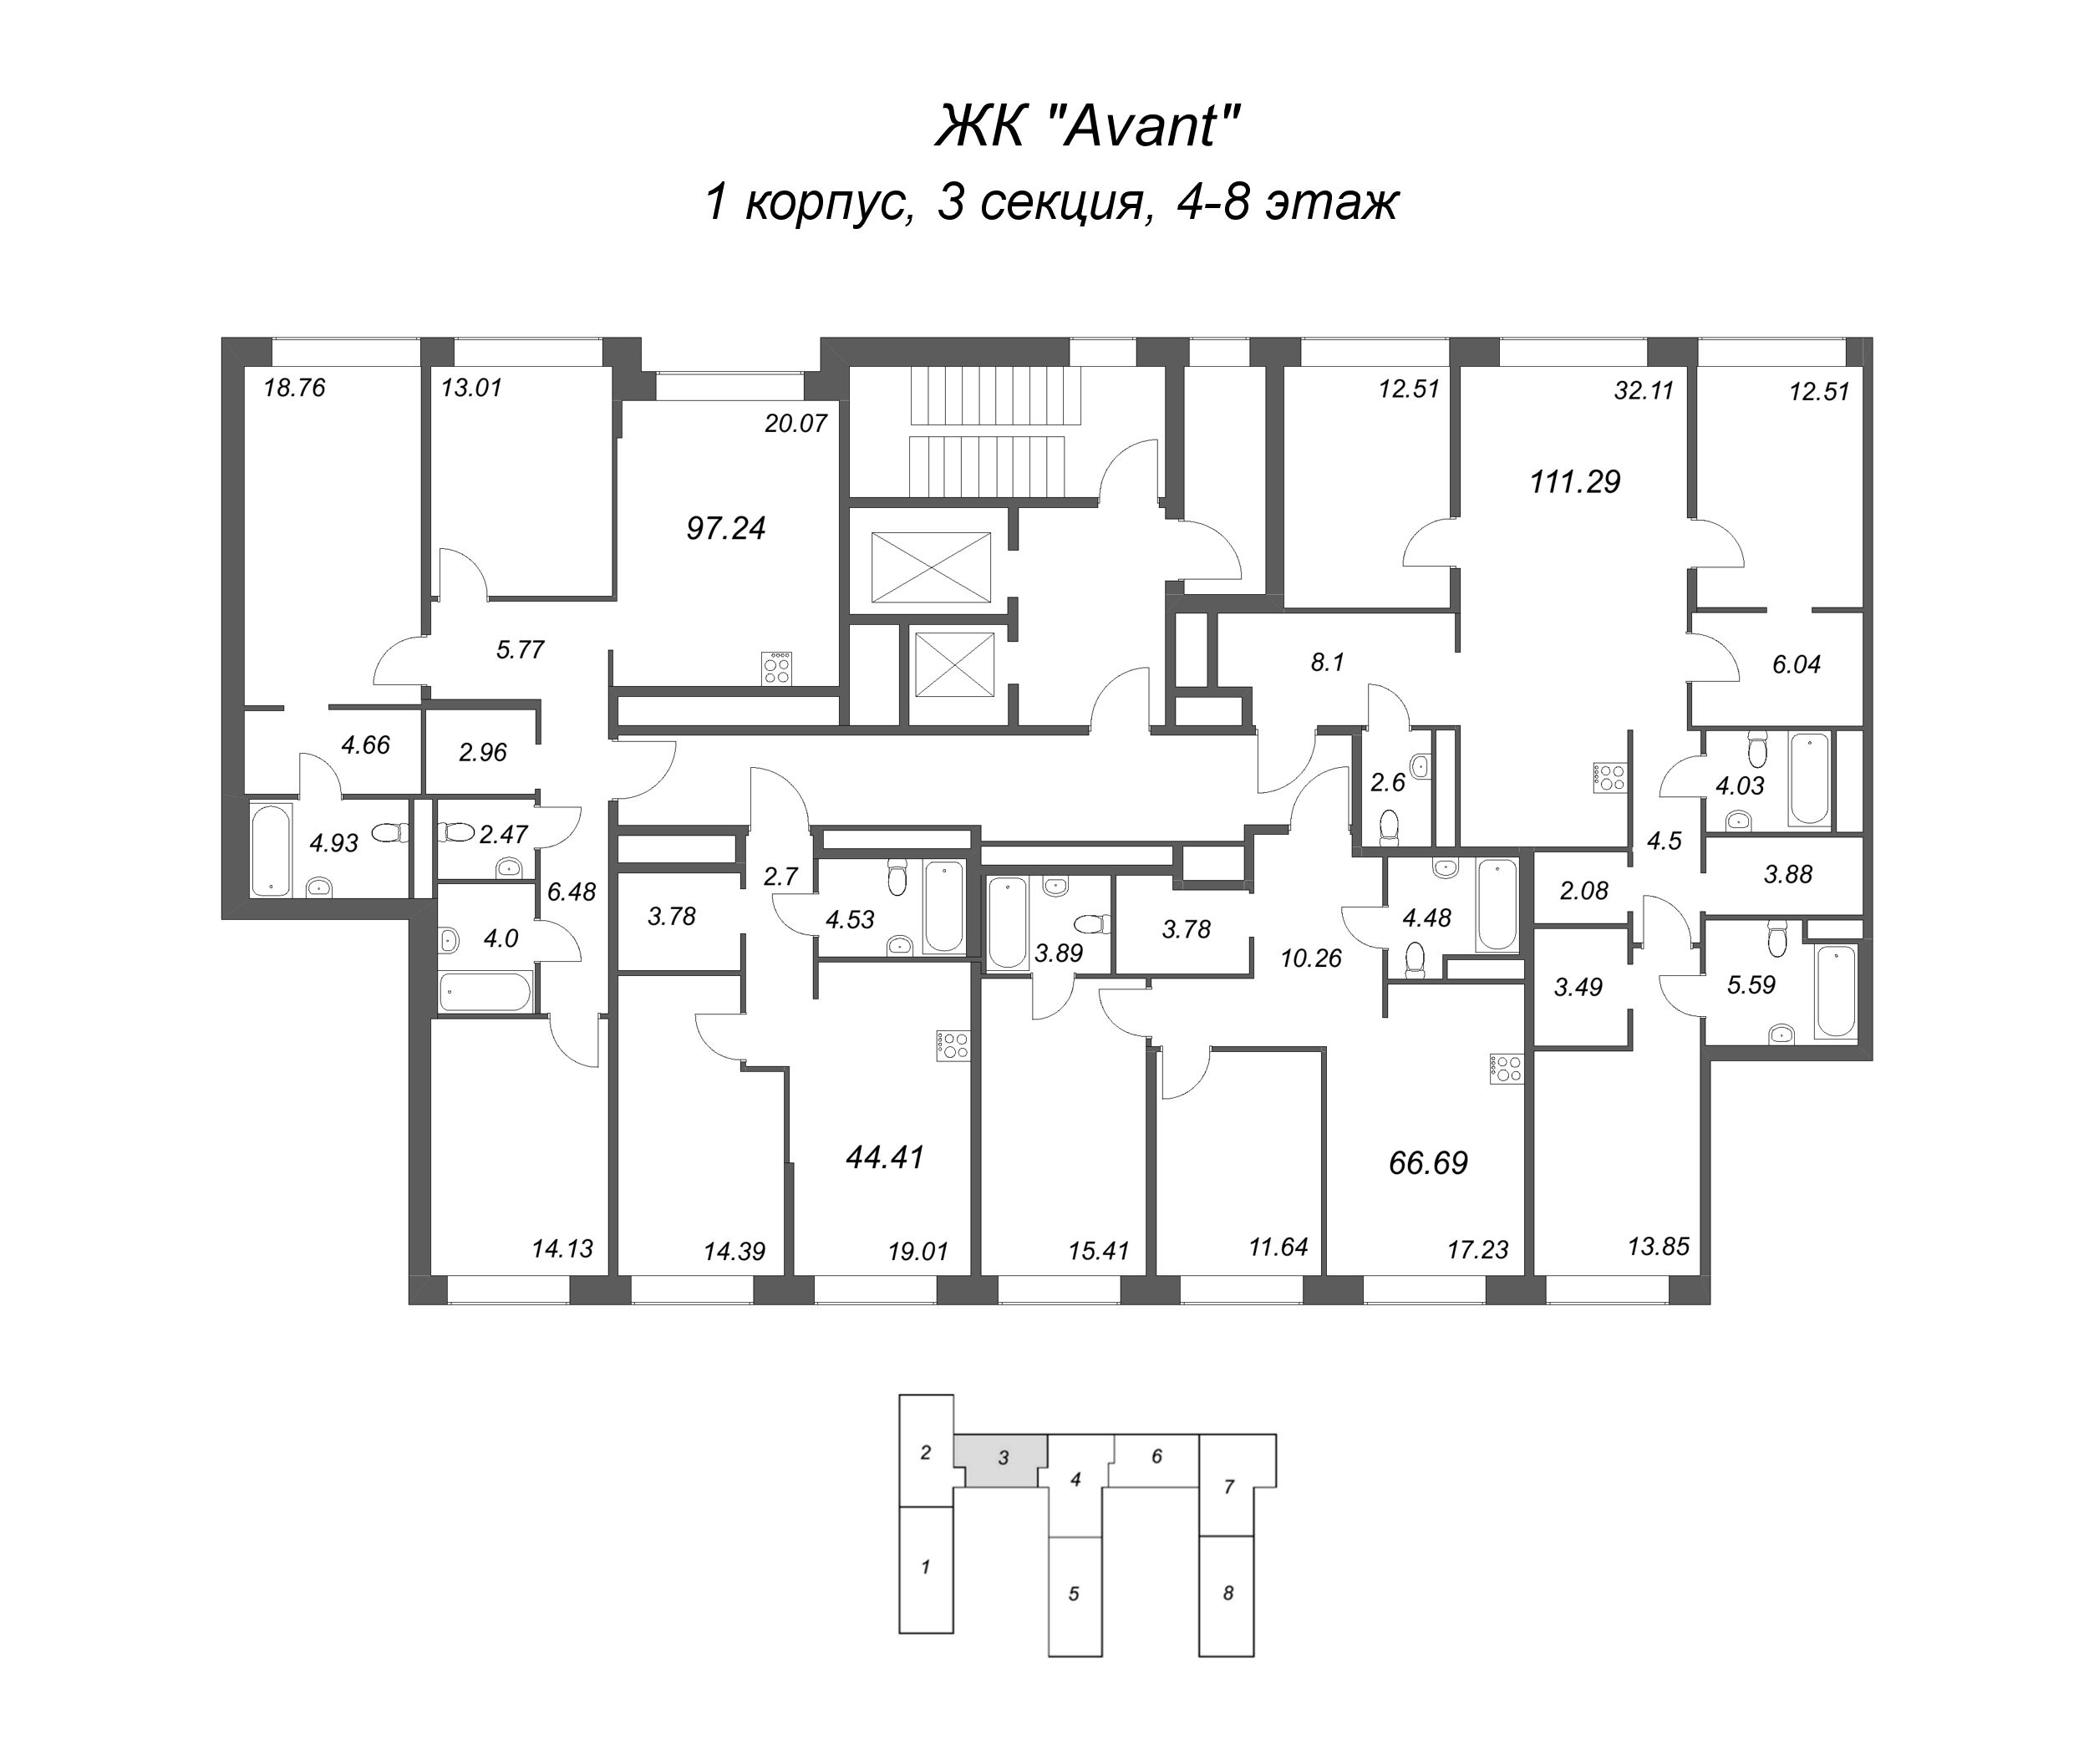 2-комнатная (Евро) квартира, 44.41 м² - планировка этажа